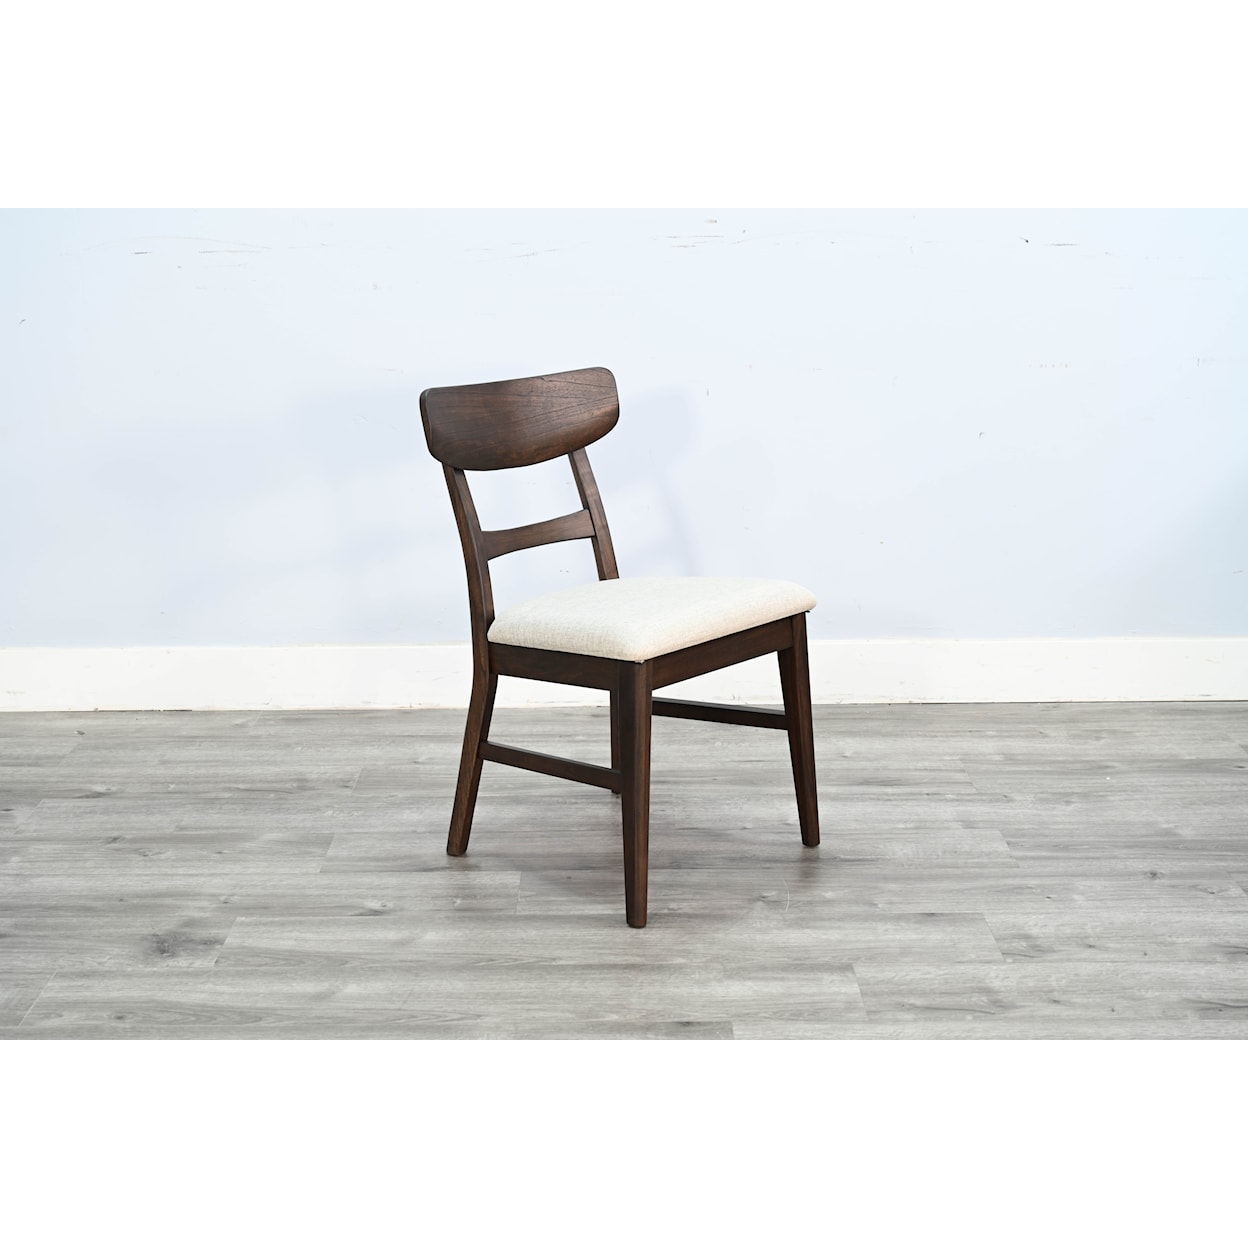 Sunny Designs American Modern Dining Chair, Cushion Seat